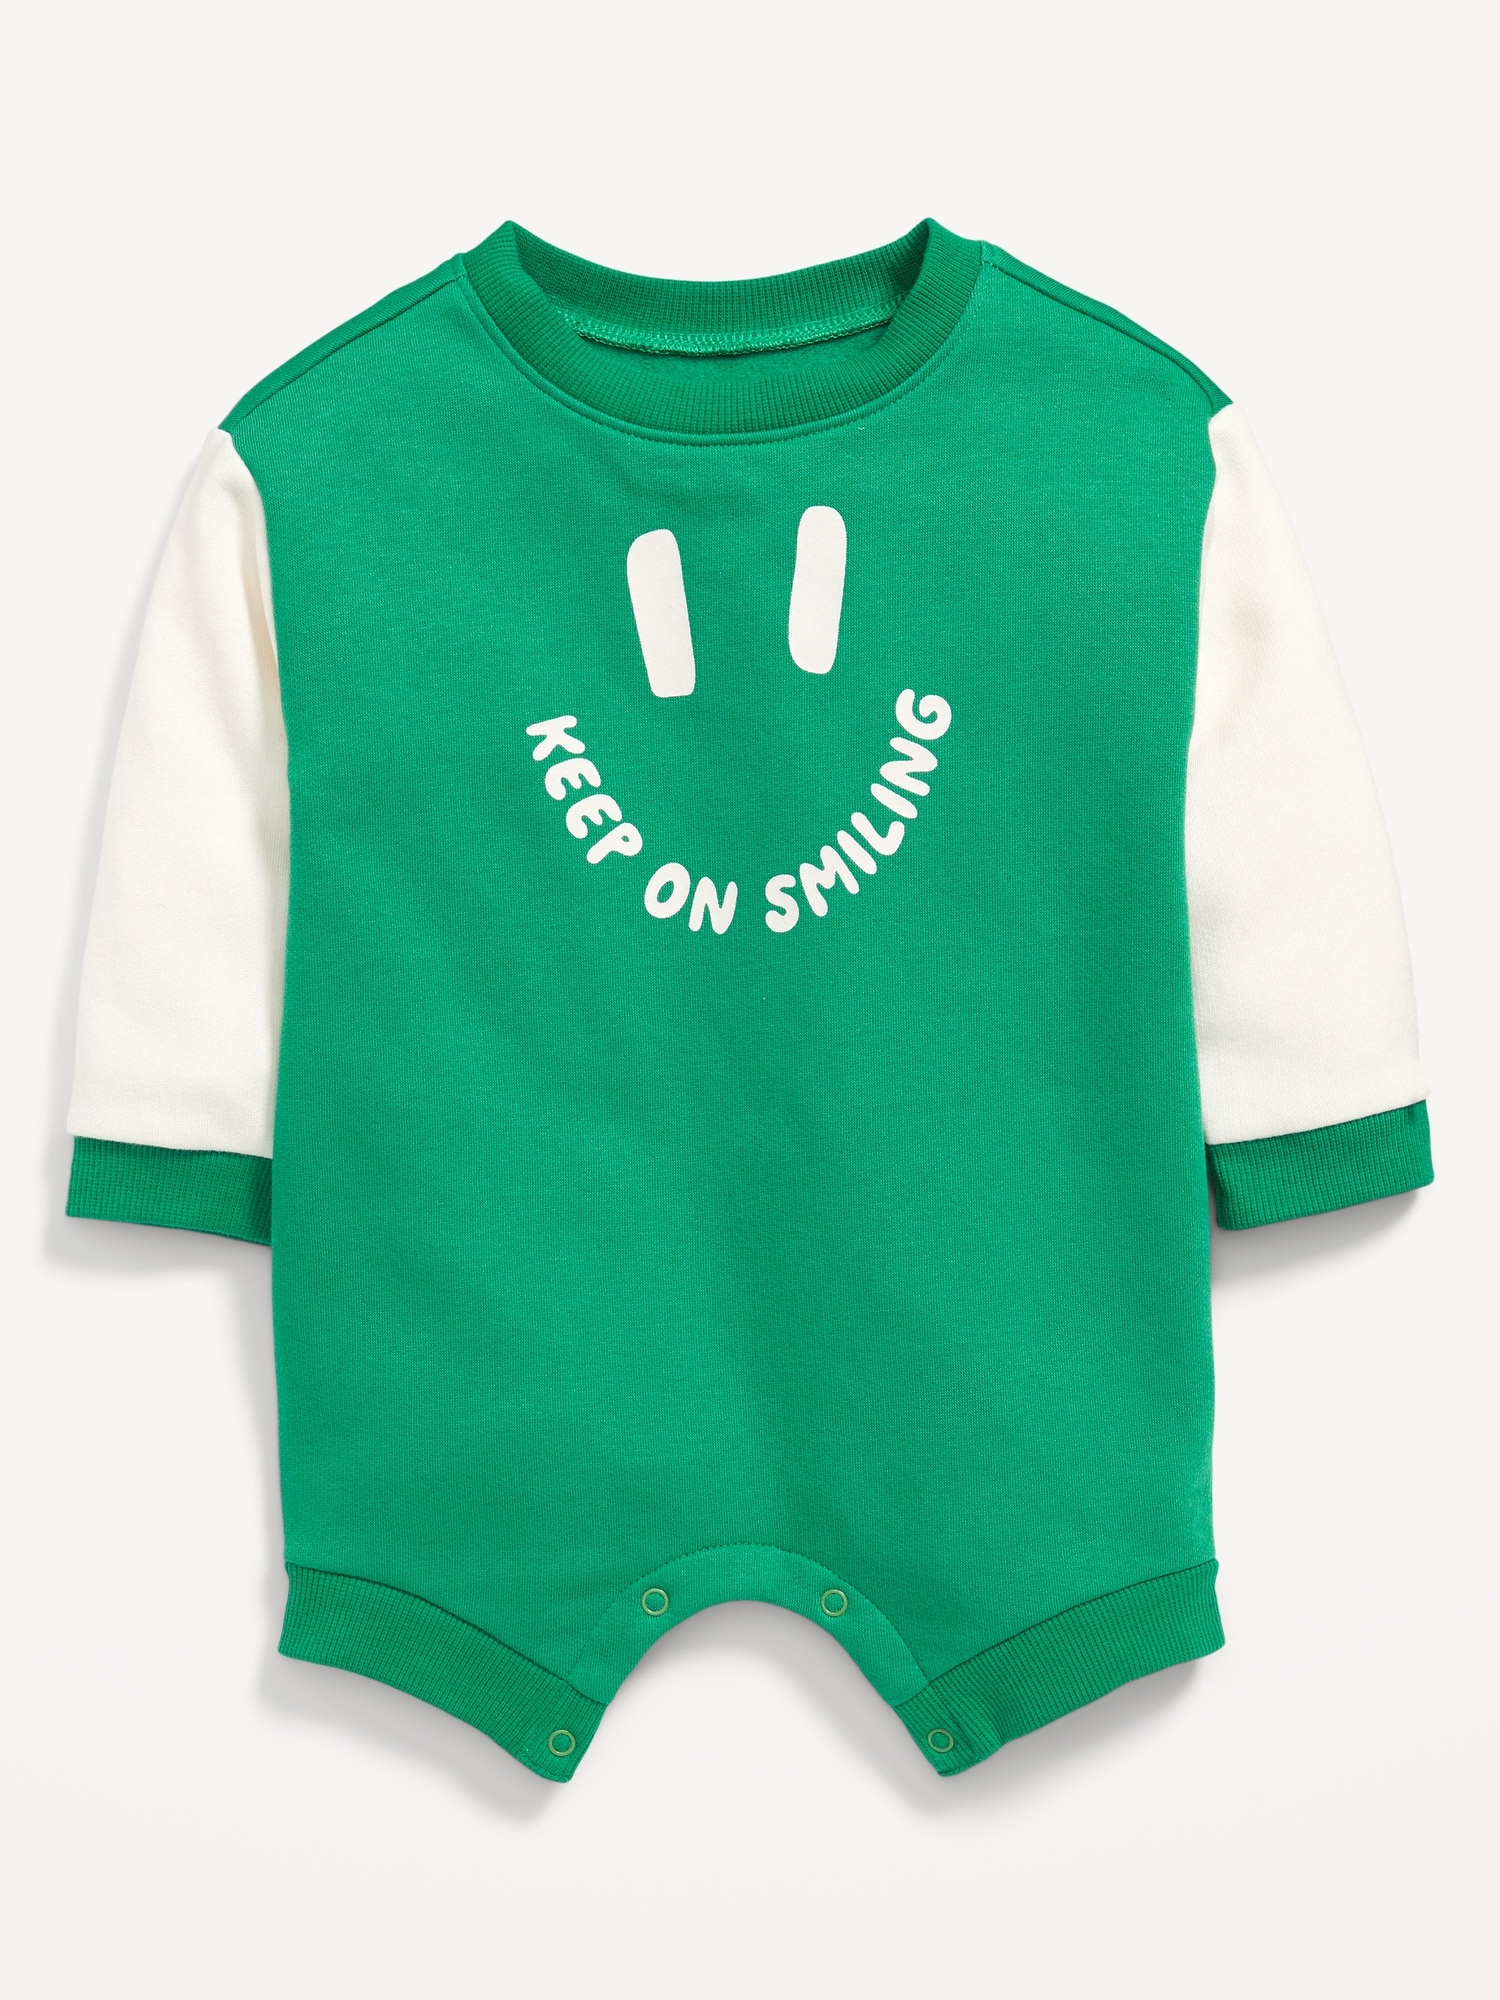 Unisex Long-Sleeve Graphic Sweatshirt Romper for Baby